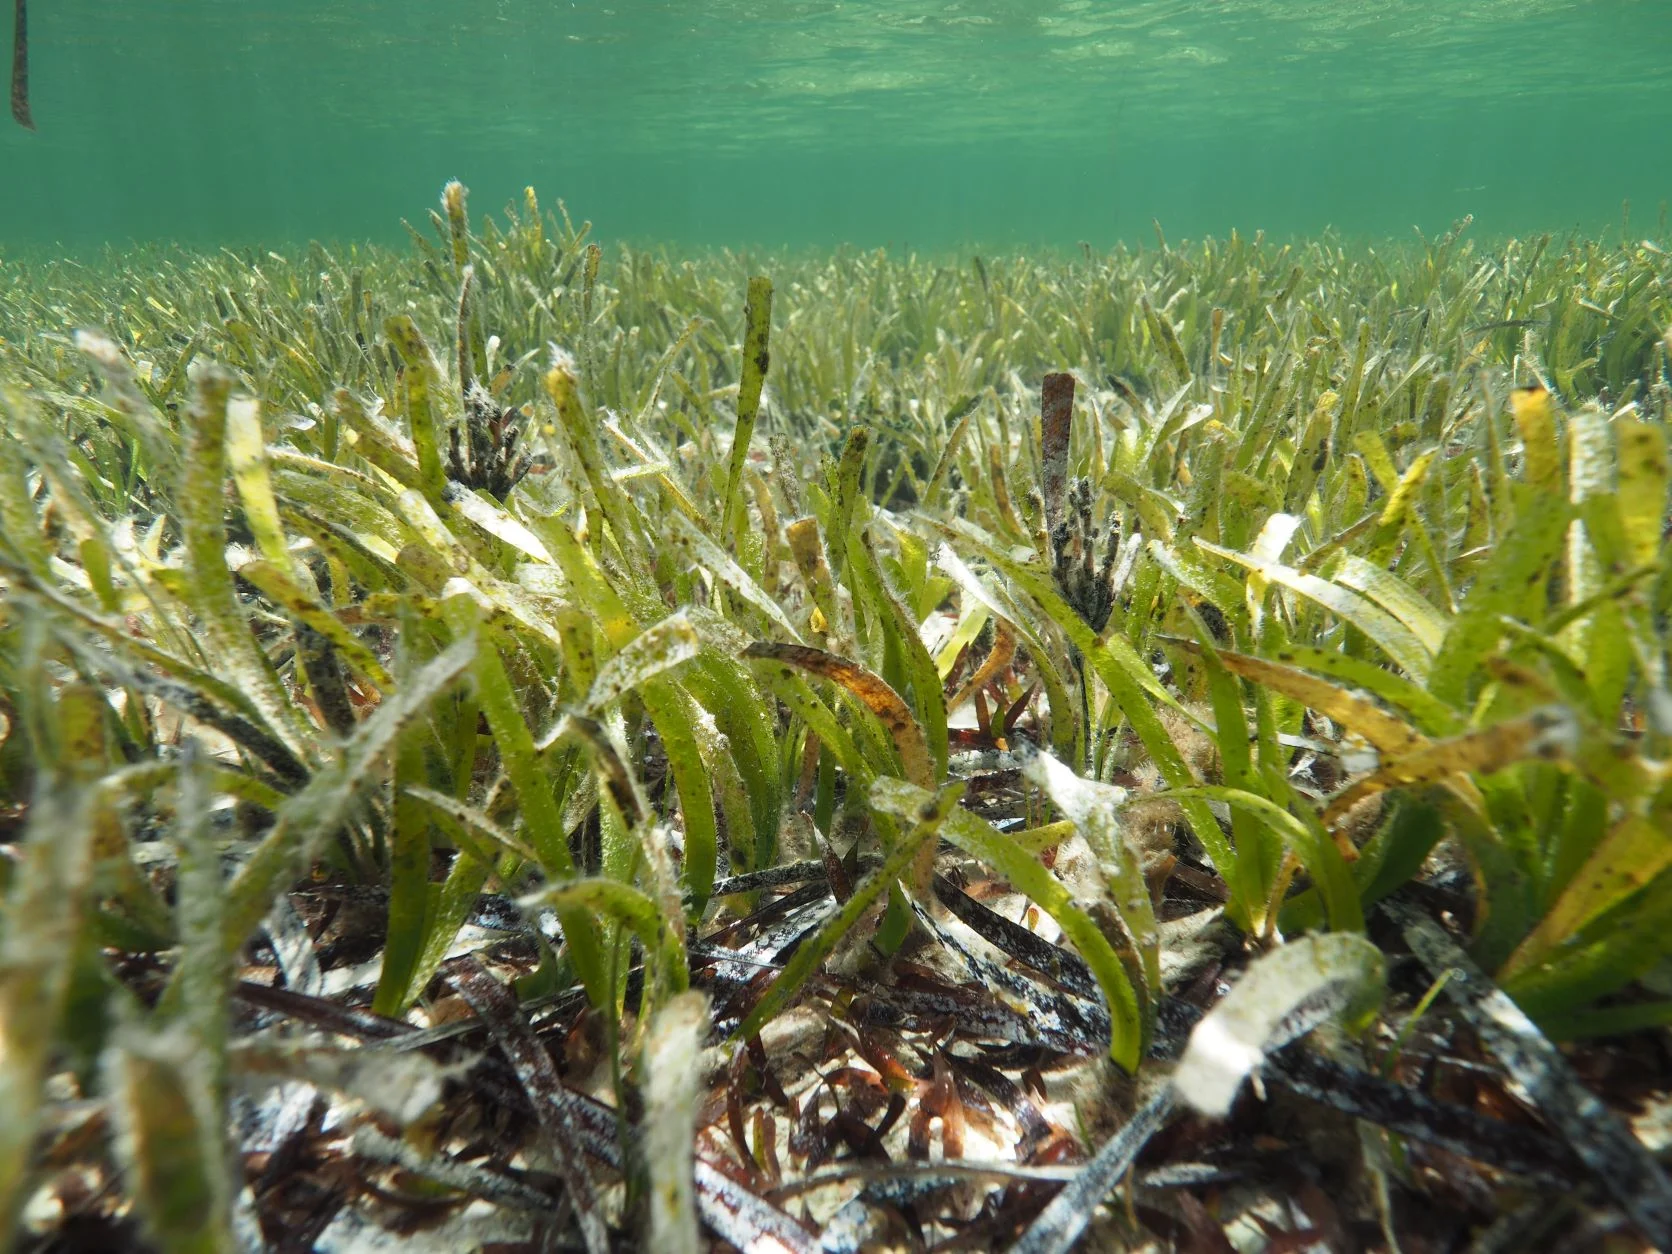 Posidonia australis seagrass meadow in Shark Bay. Photo by Sahira Bell, PhD graduate from UWA